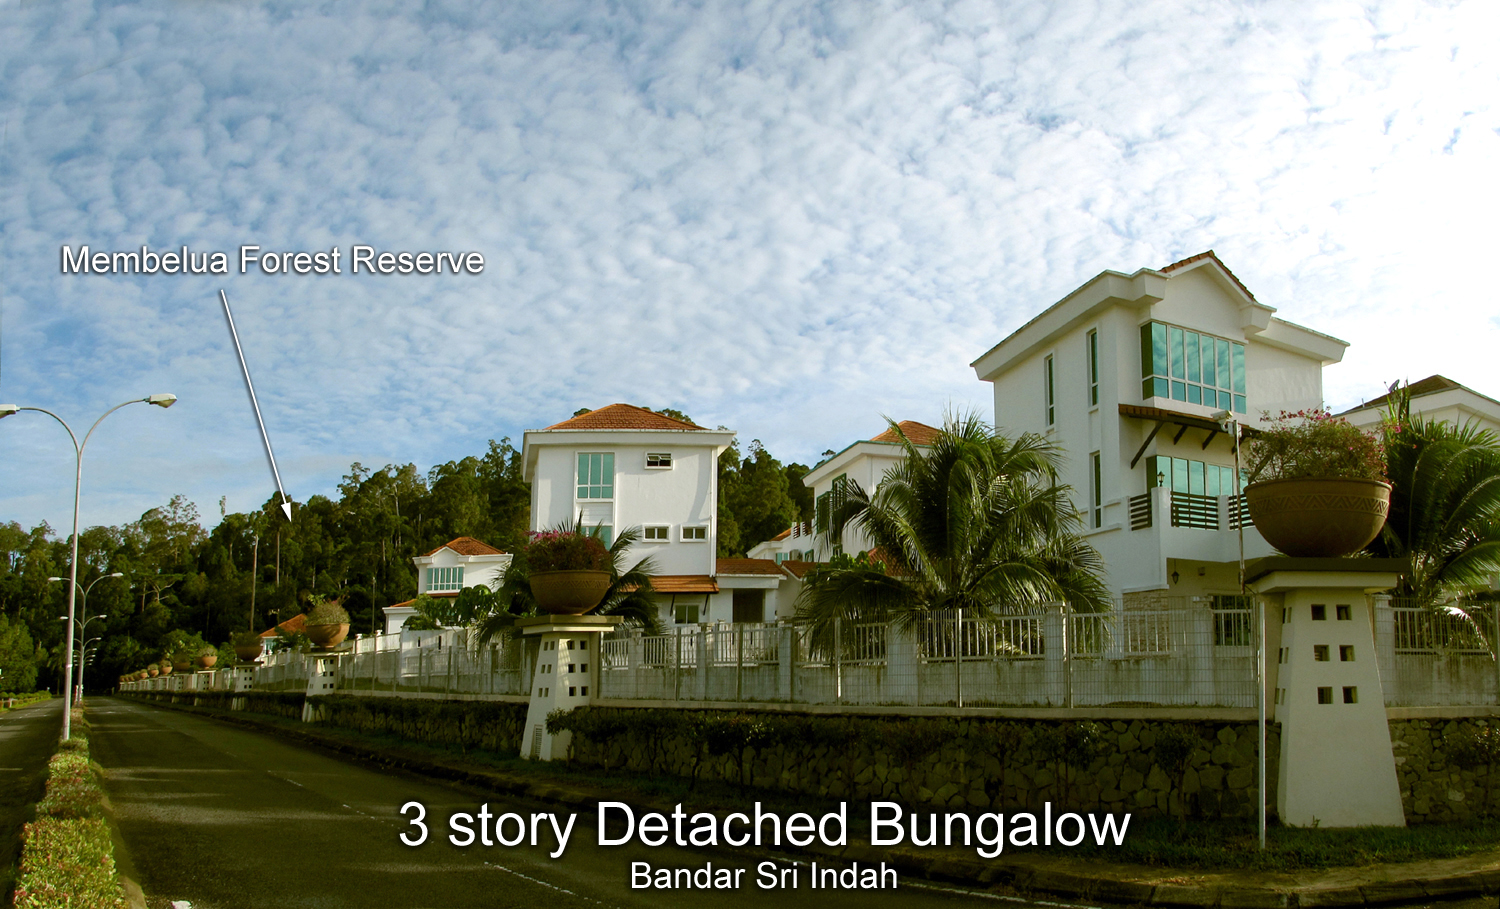 3 story Detached Bungalow, Bandar Sri Indah